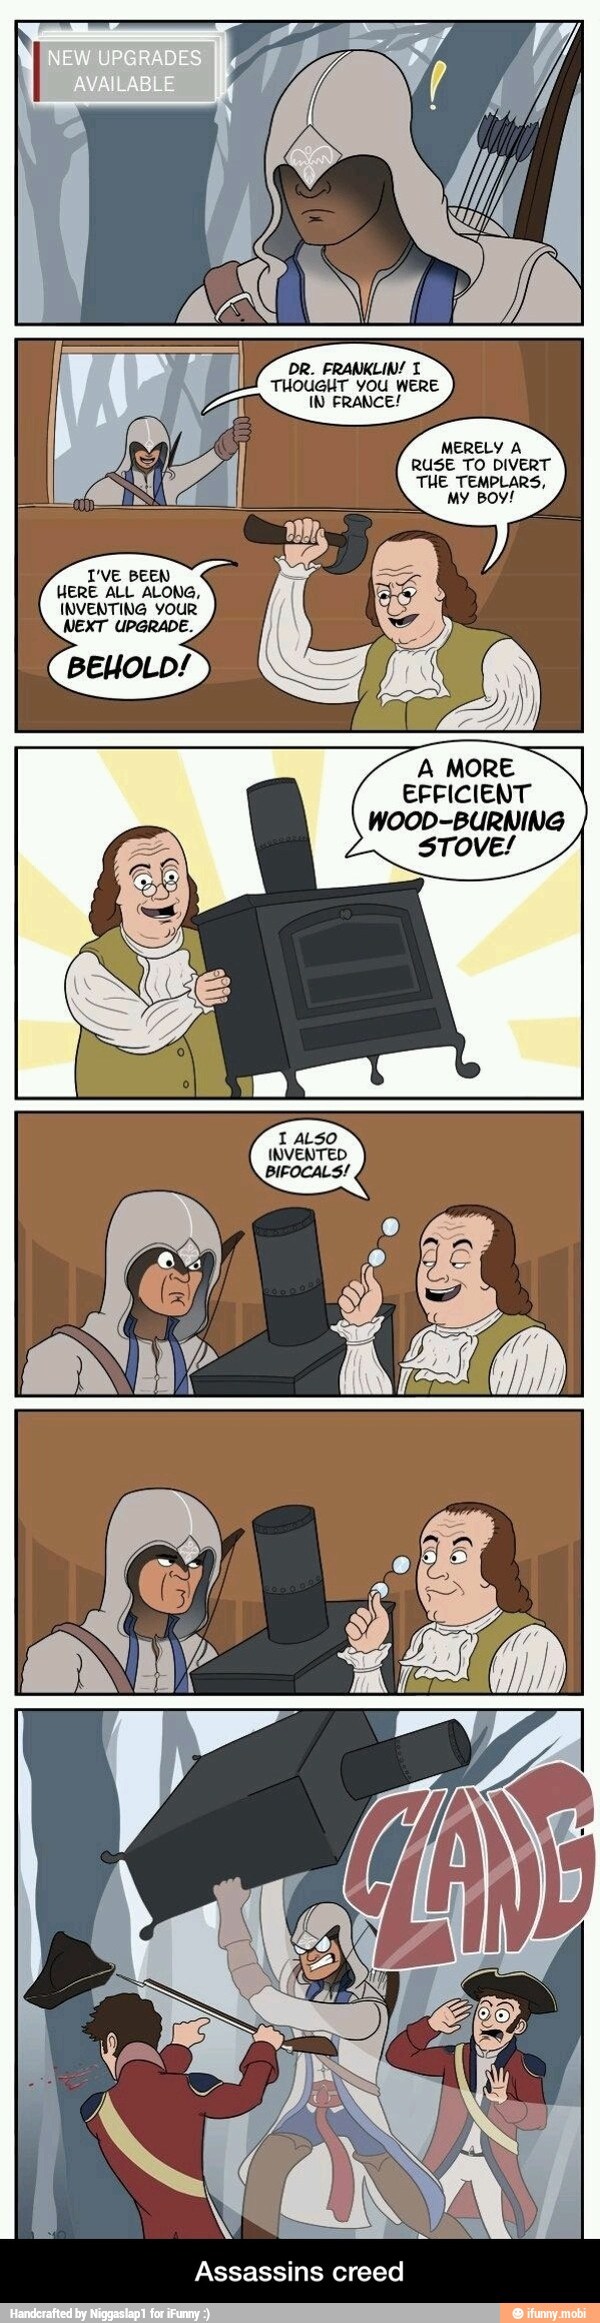 Ben Franklin making the best weapons - meme